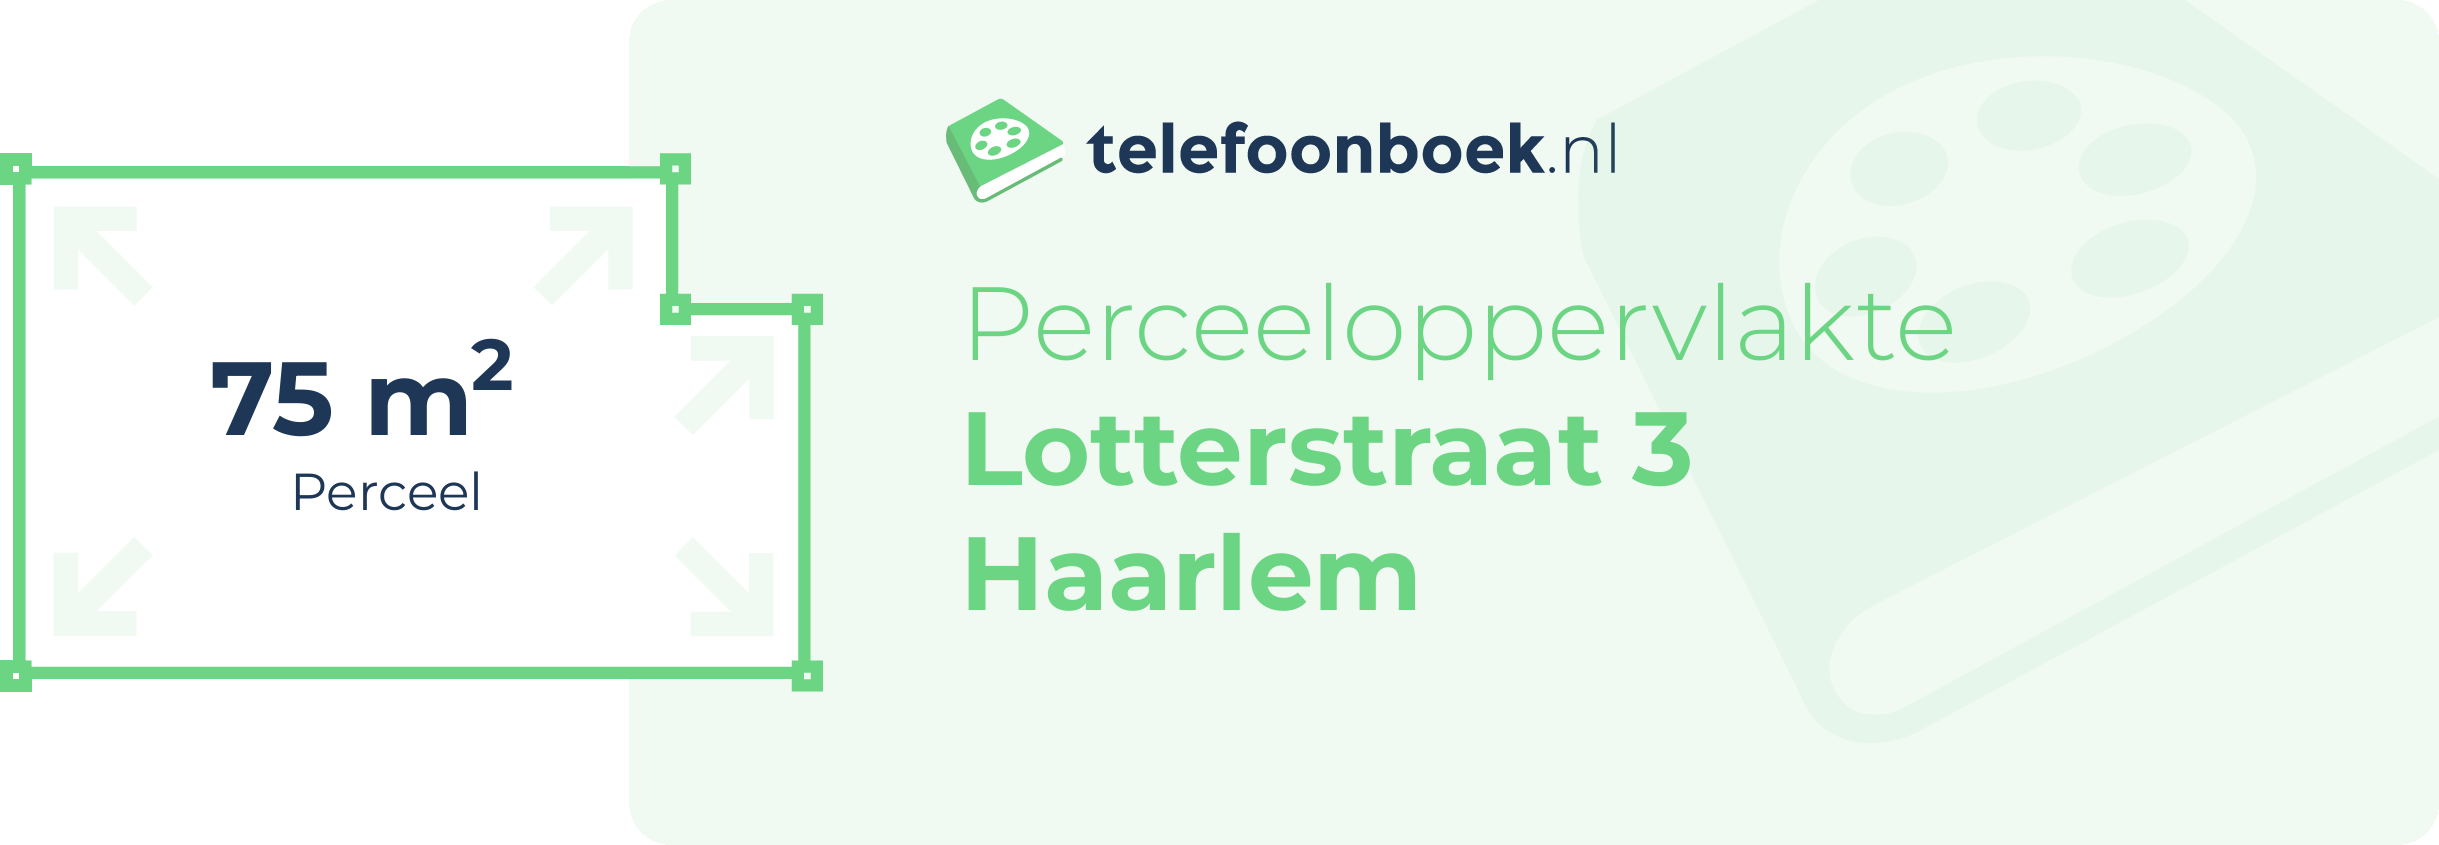 Perceeloppervlakte Lotterstraat 3 Haarlem